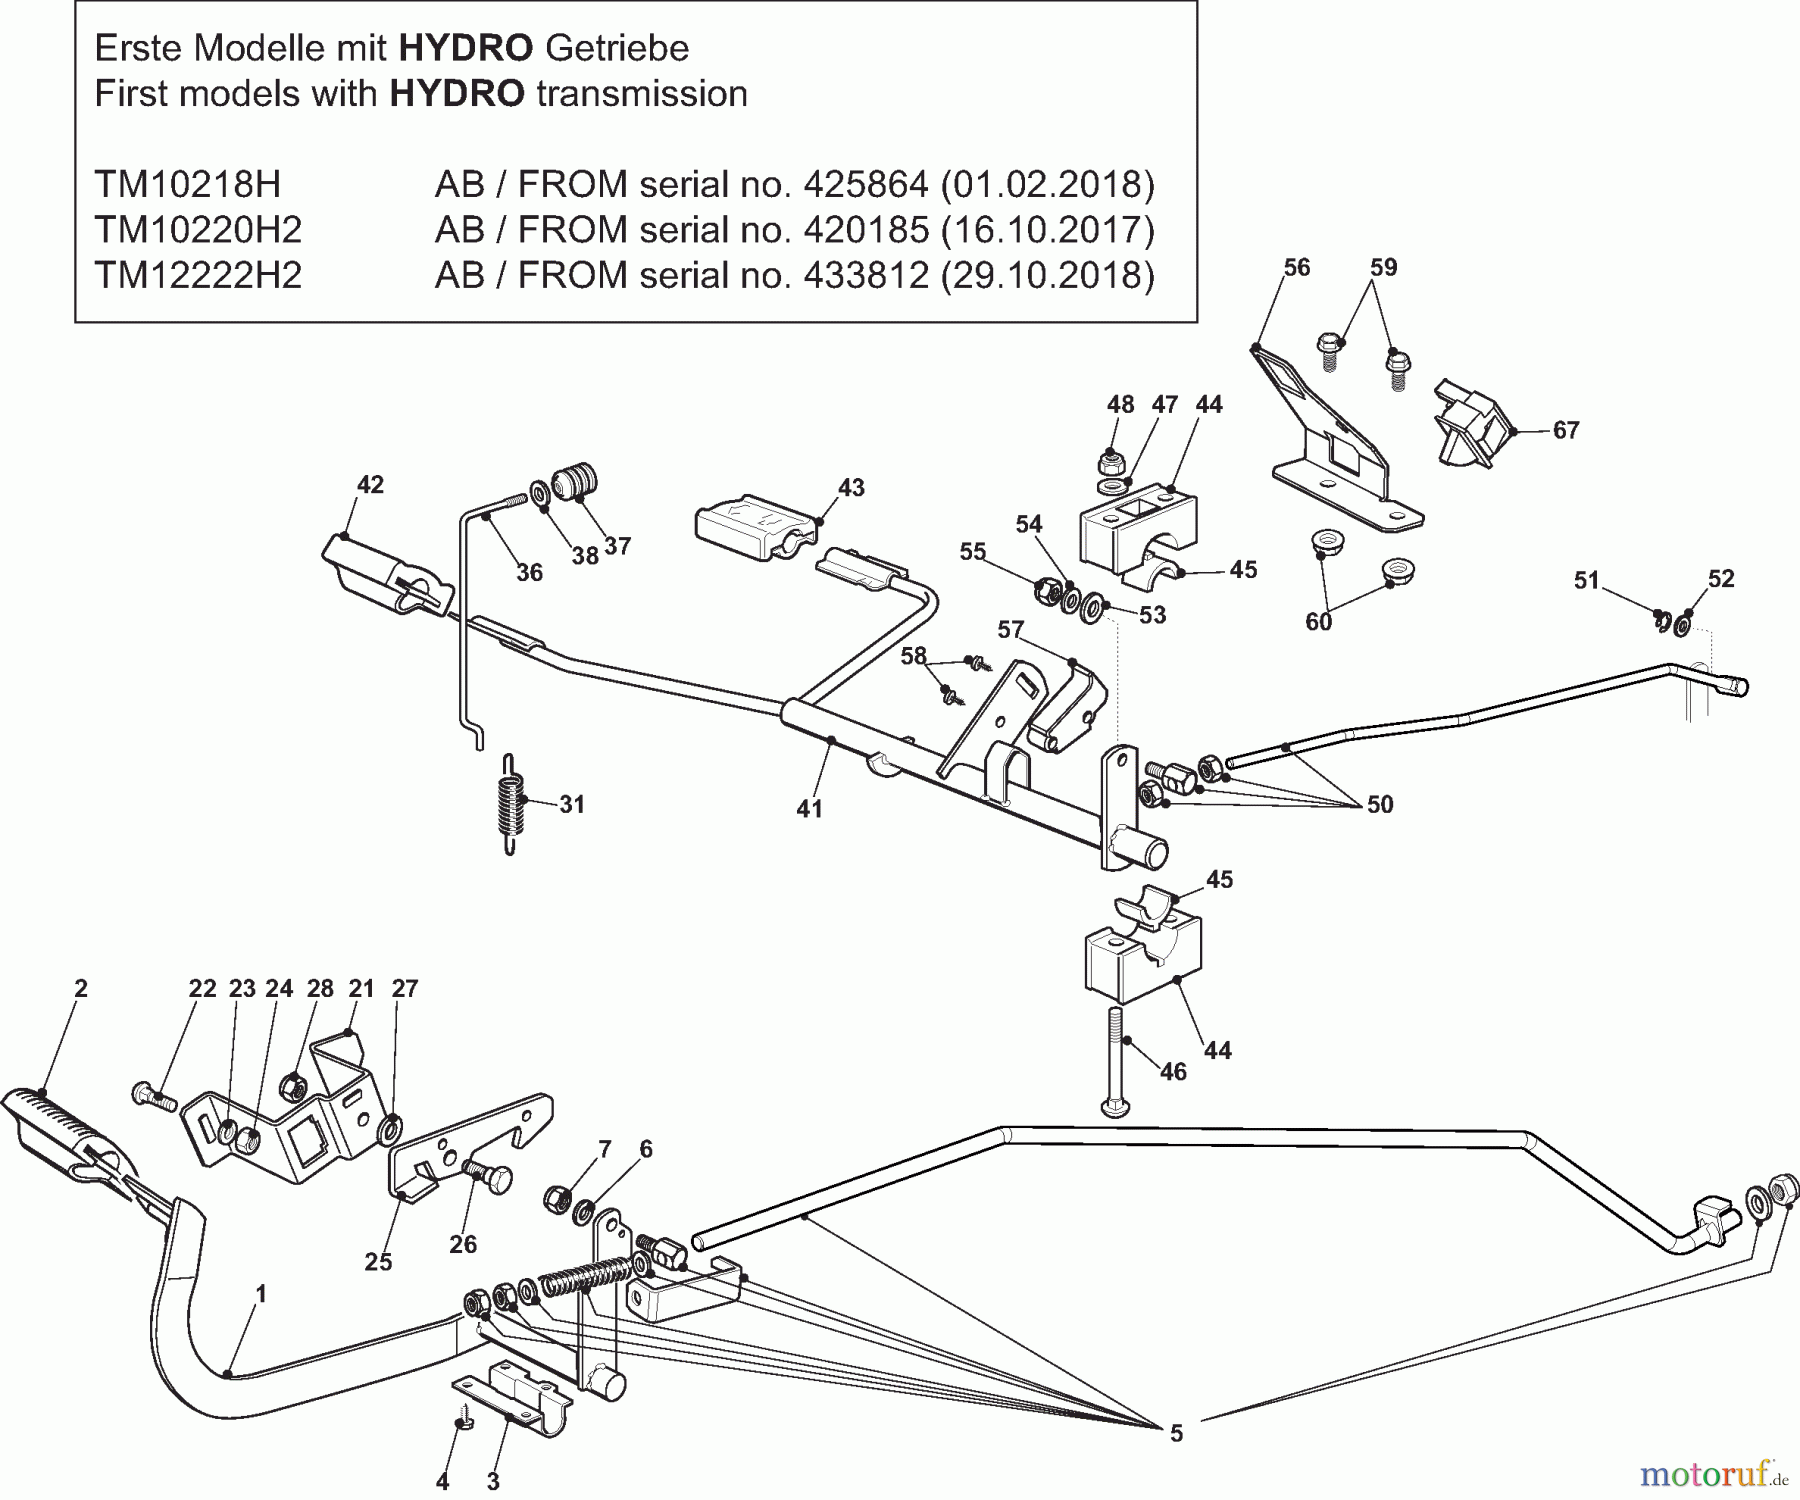  Dolmar Rasentraktoren TM12222H2 TM12222H2 (2015-2019) 4ya  Pedale für HYDRO Getriebe